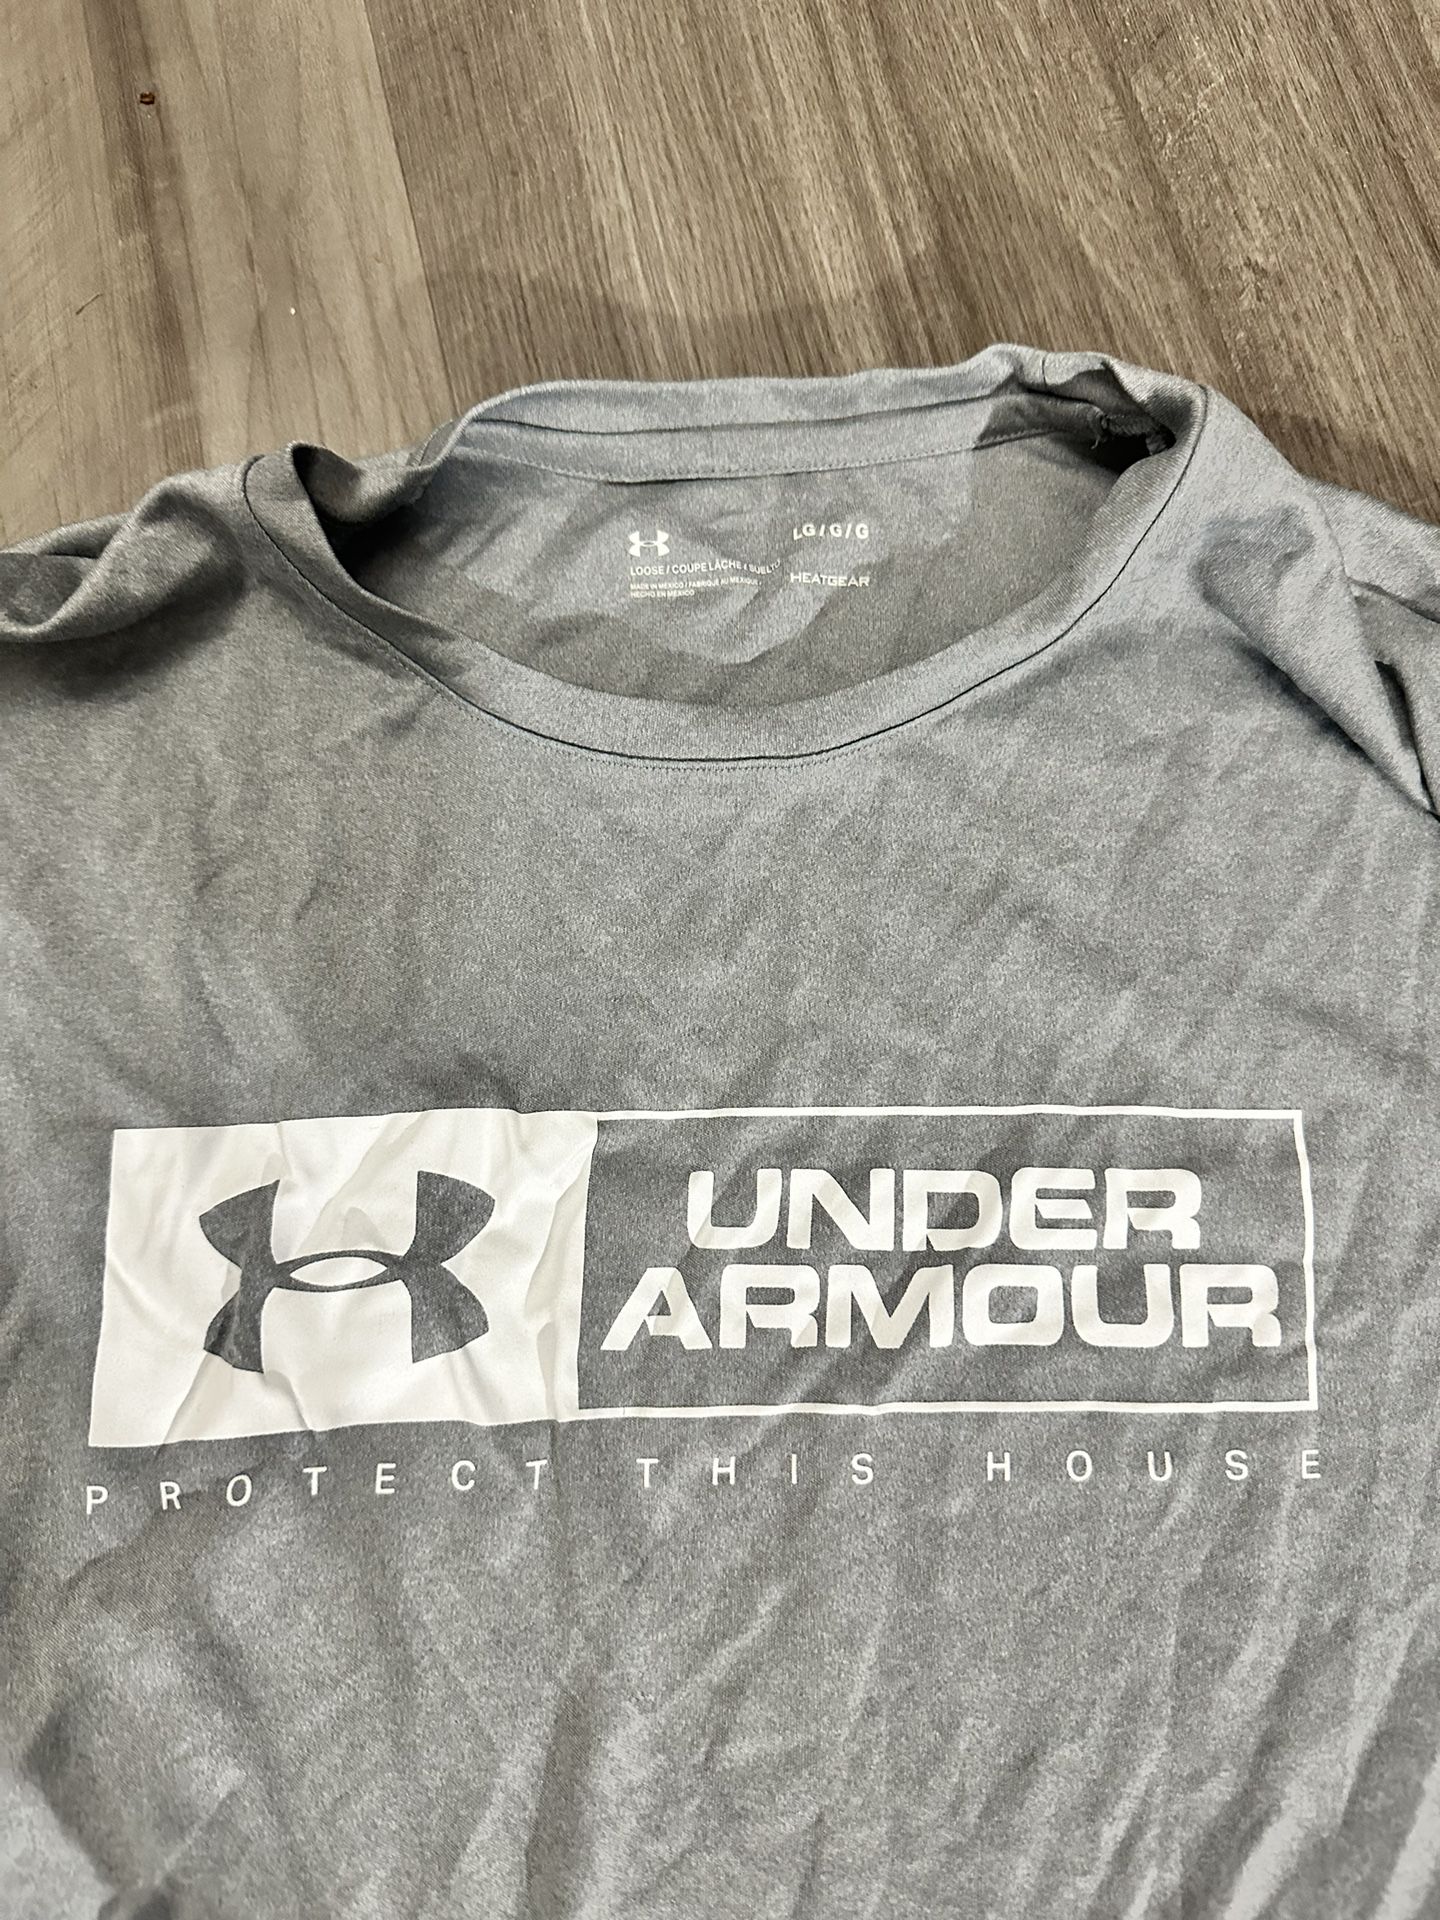 Under Armor Shirt 